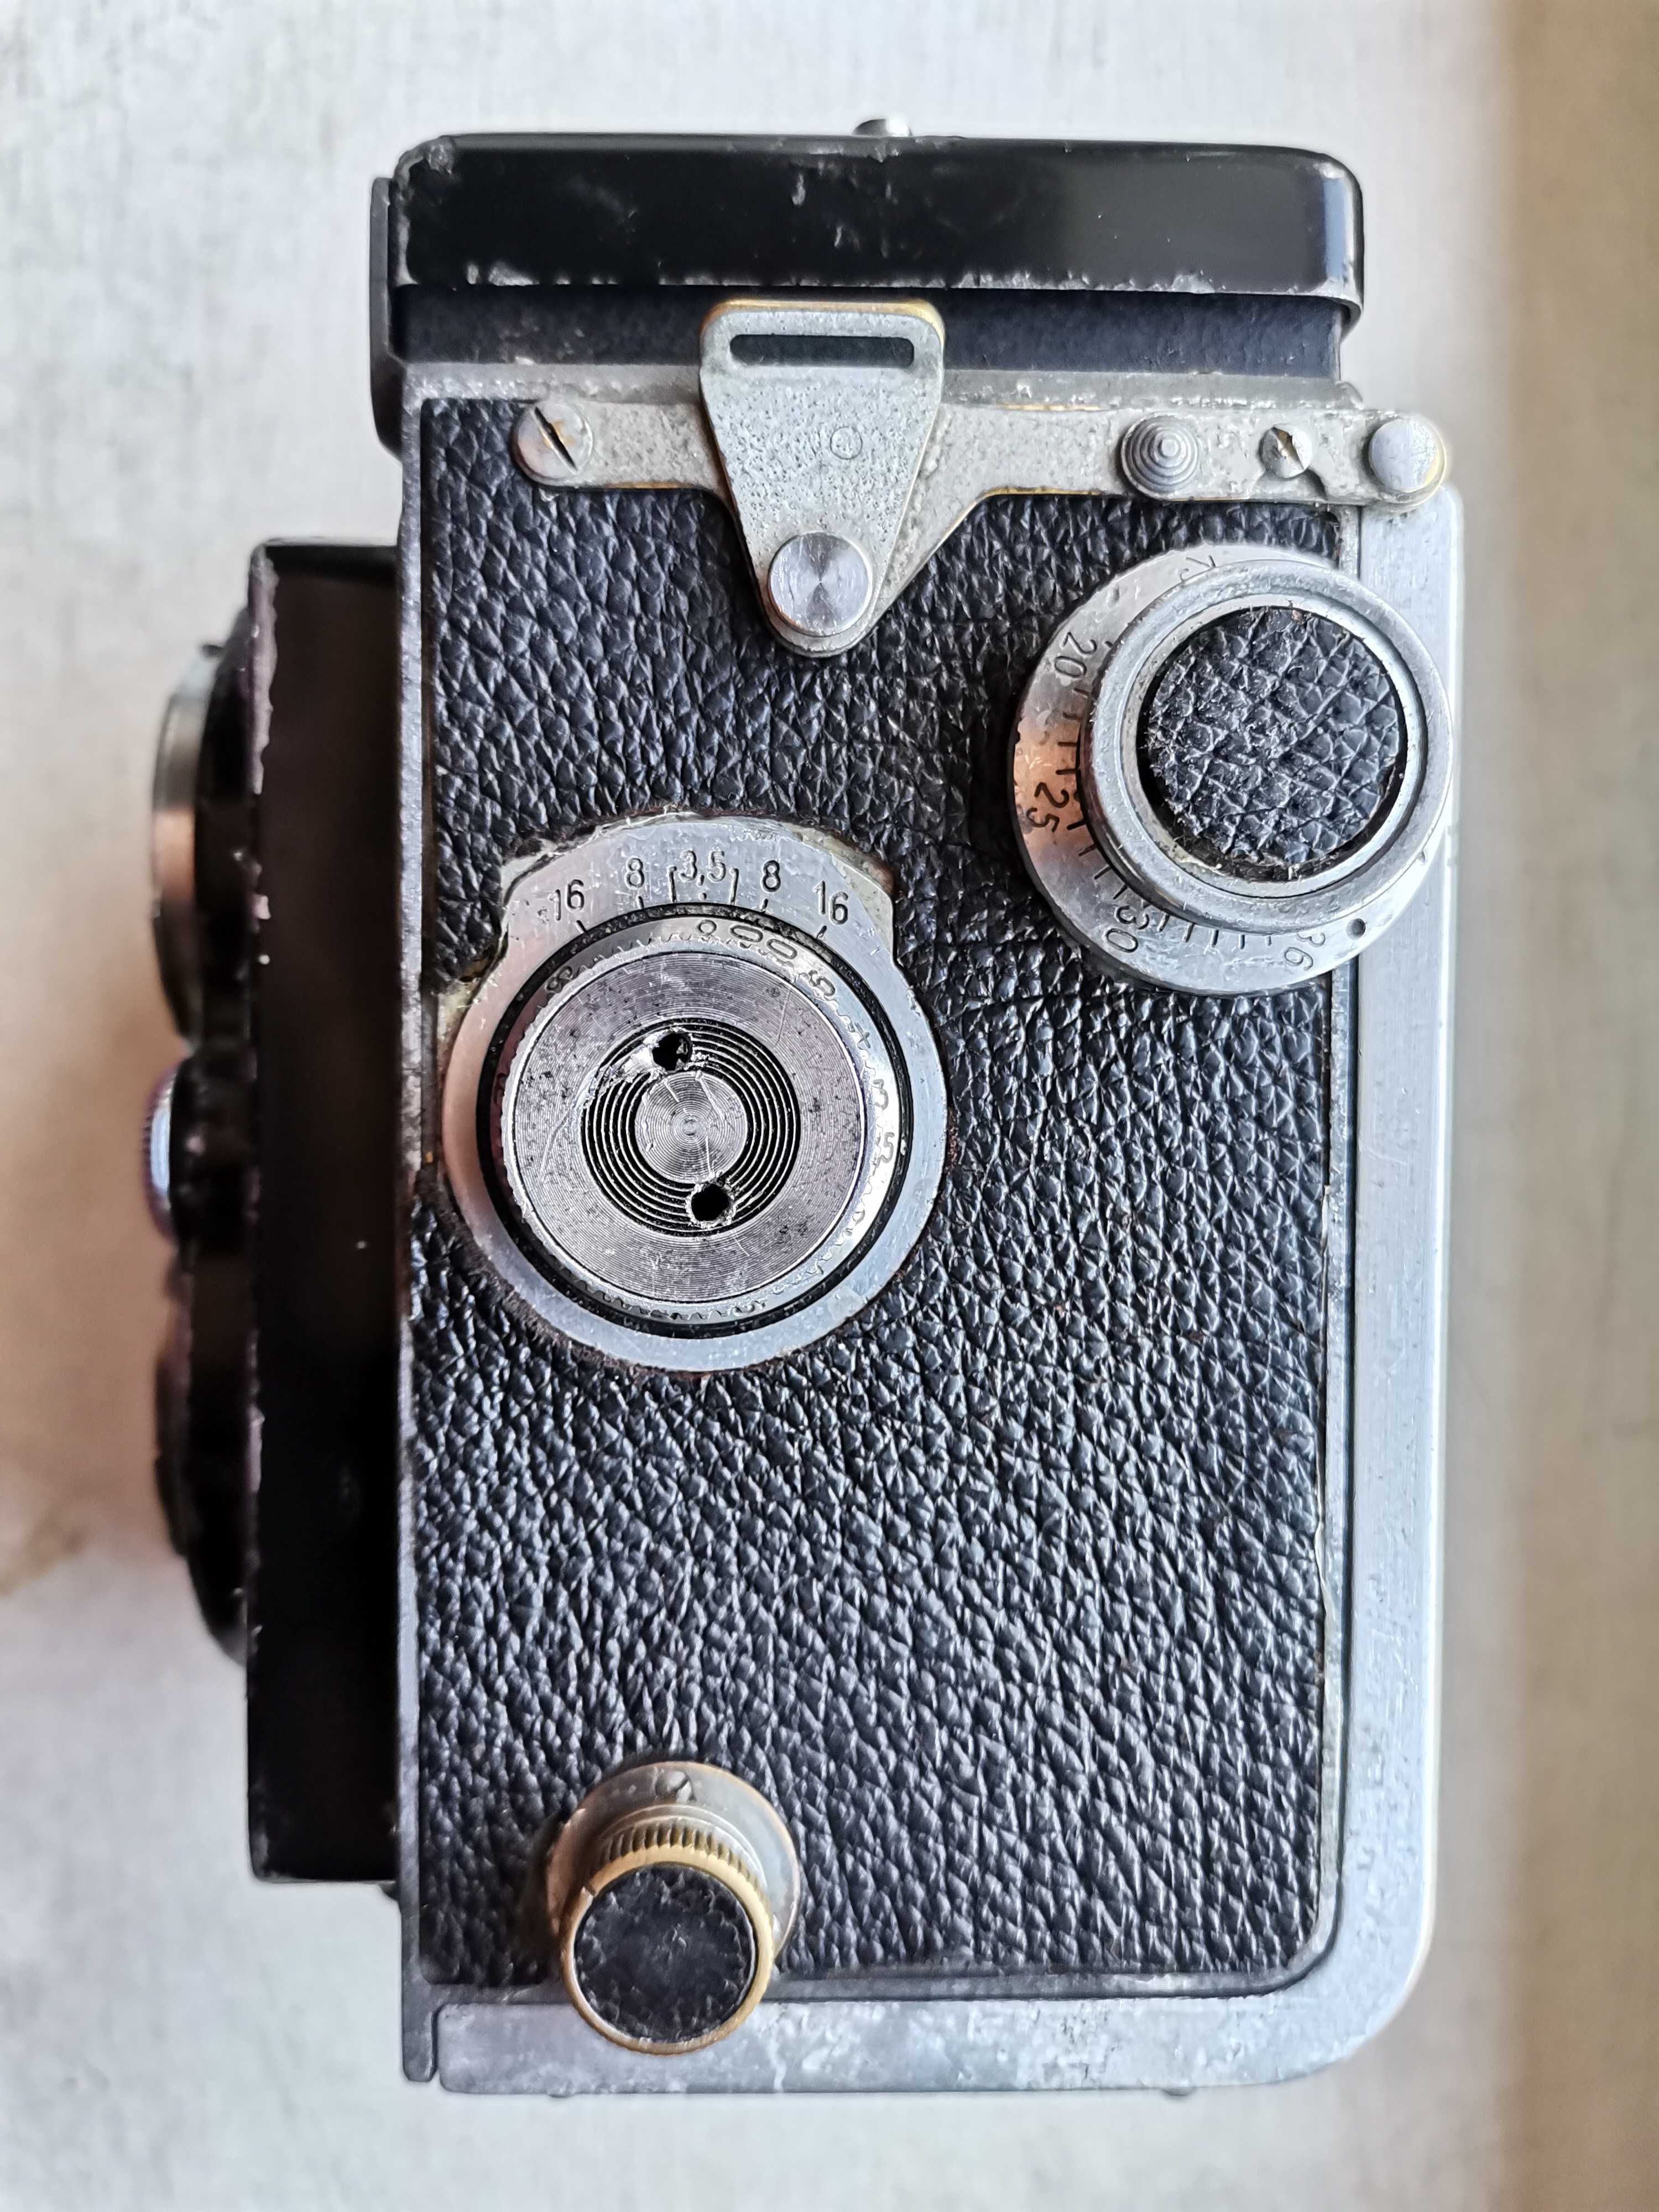 Aparat foto vechi Rolleiflex - cadoul perfect